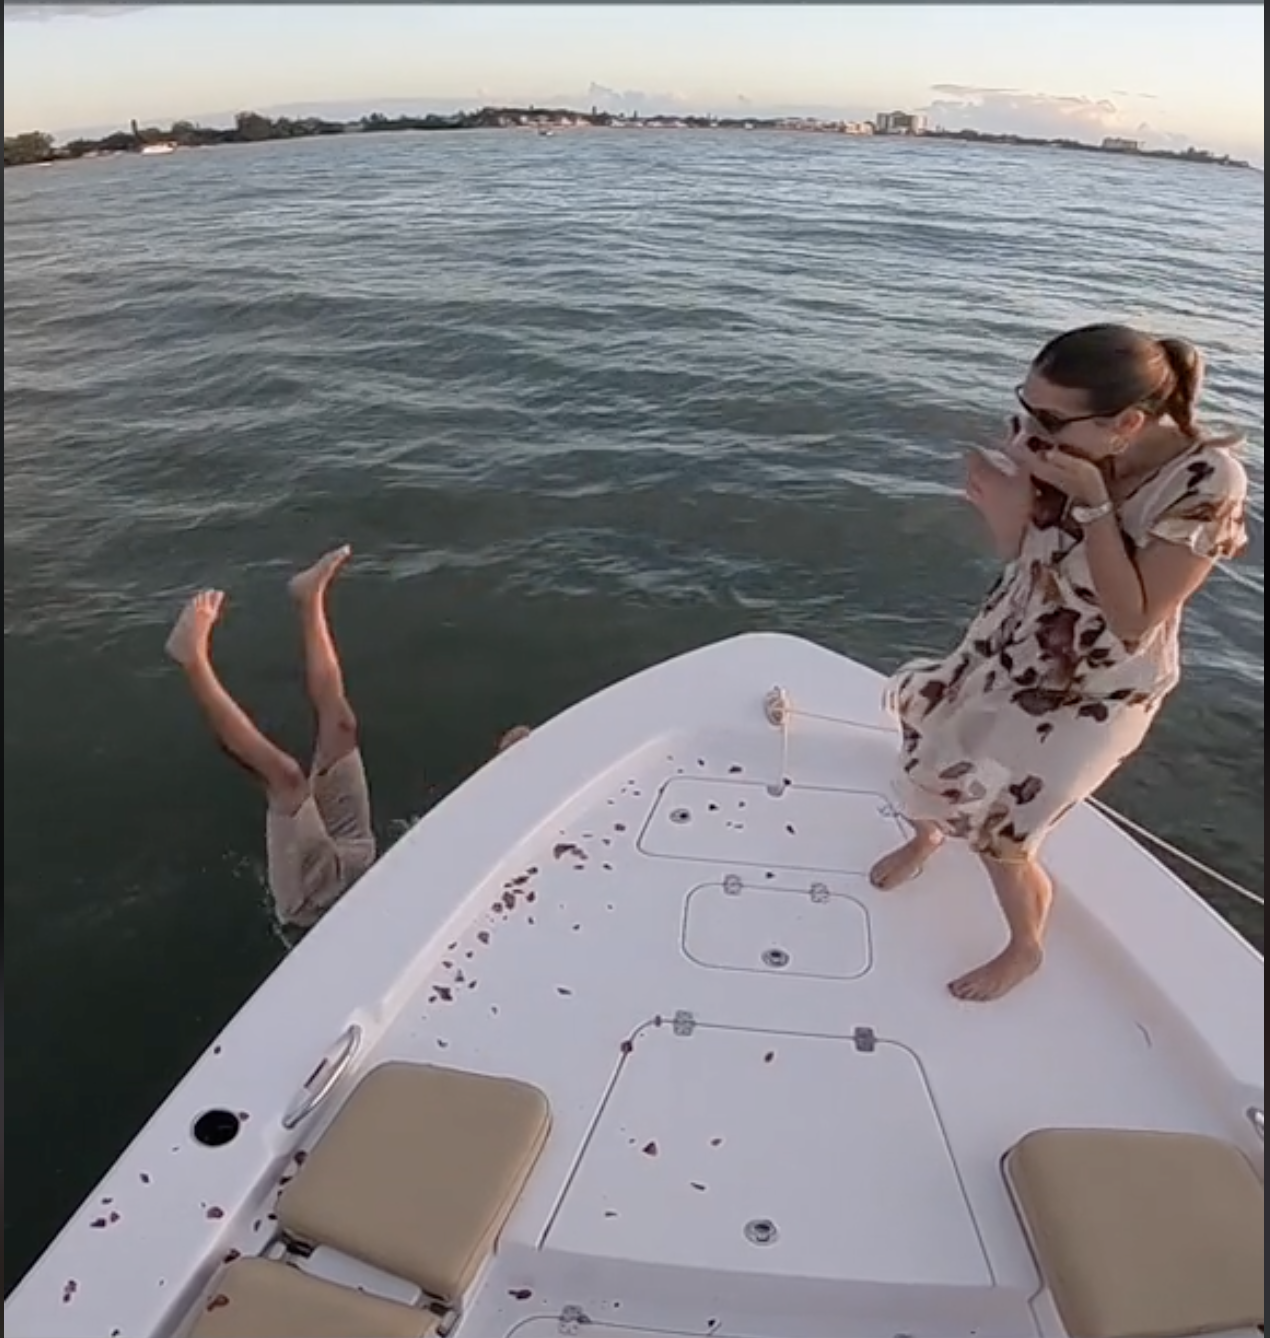 Scott Clyne falls into the water to retrieve the ring box | Source: TikTok/humankind